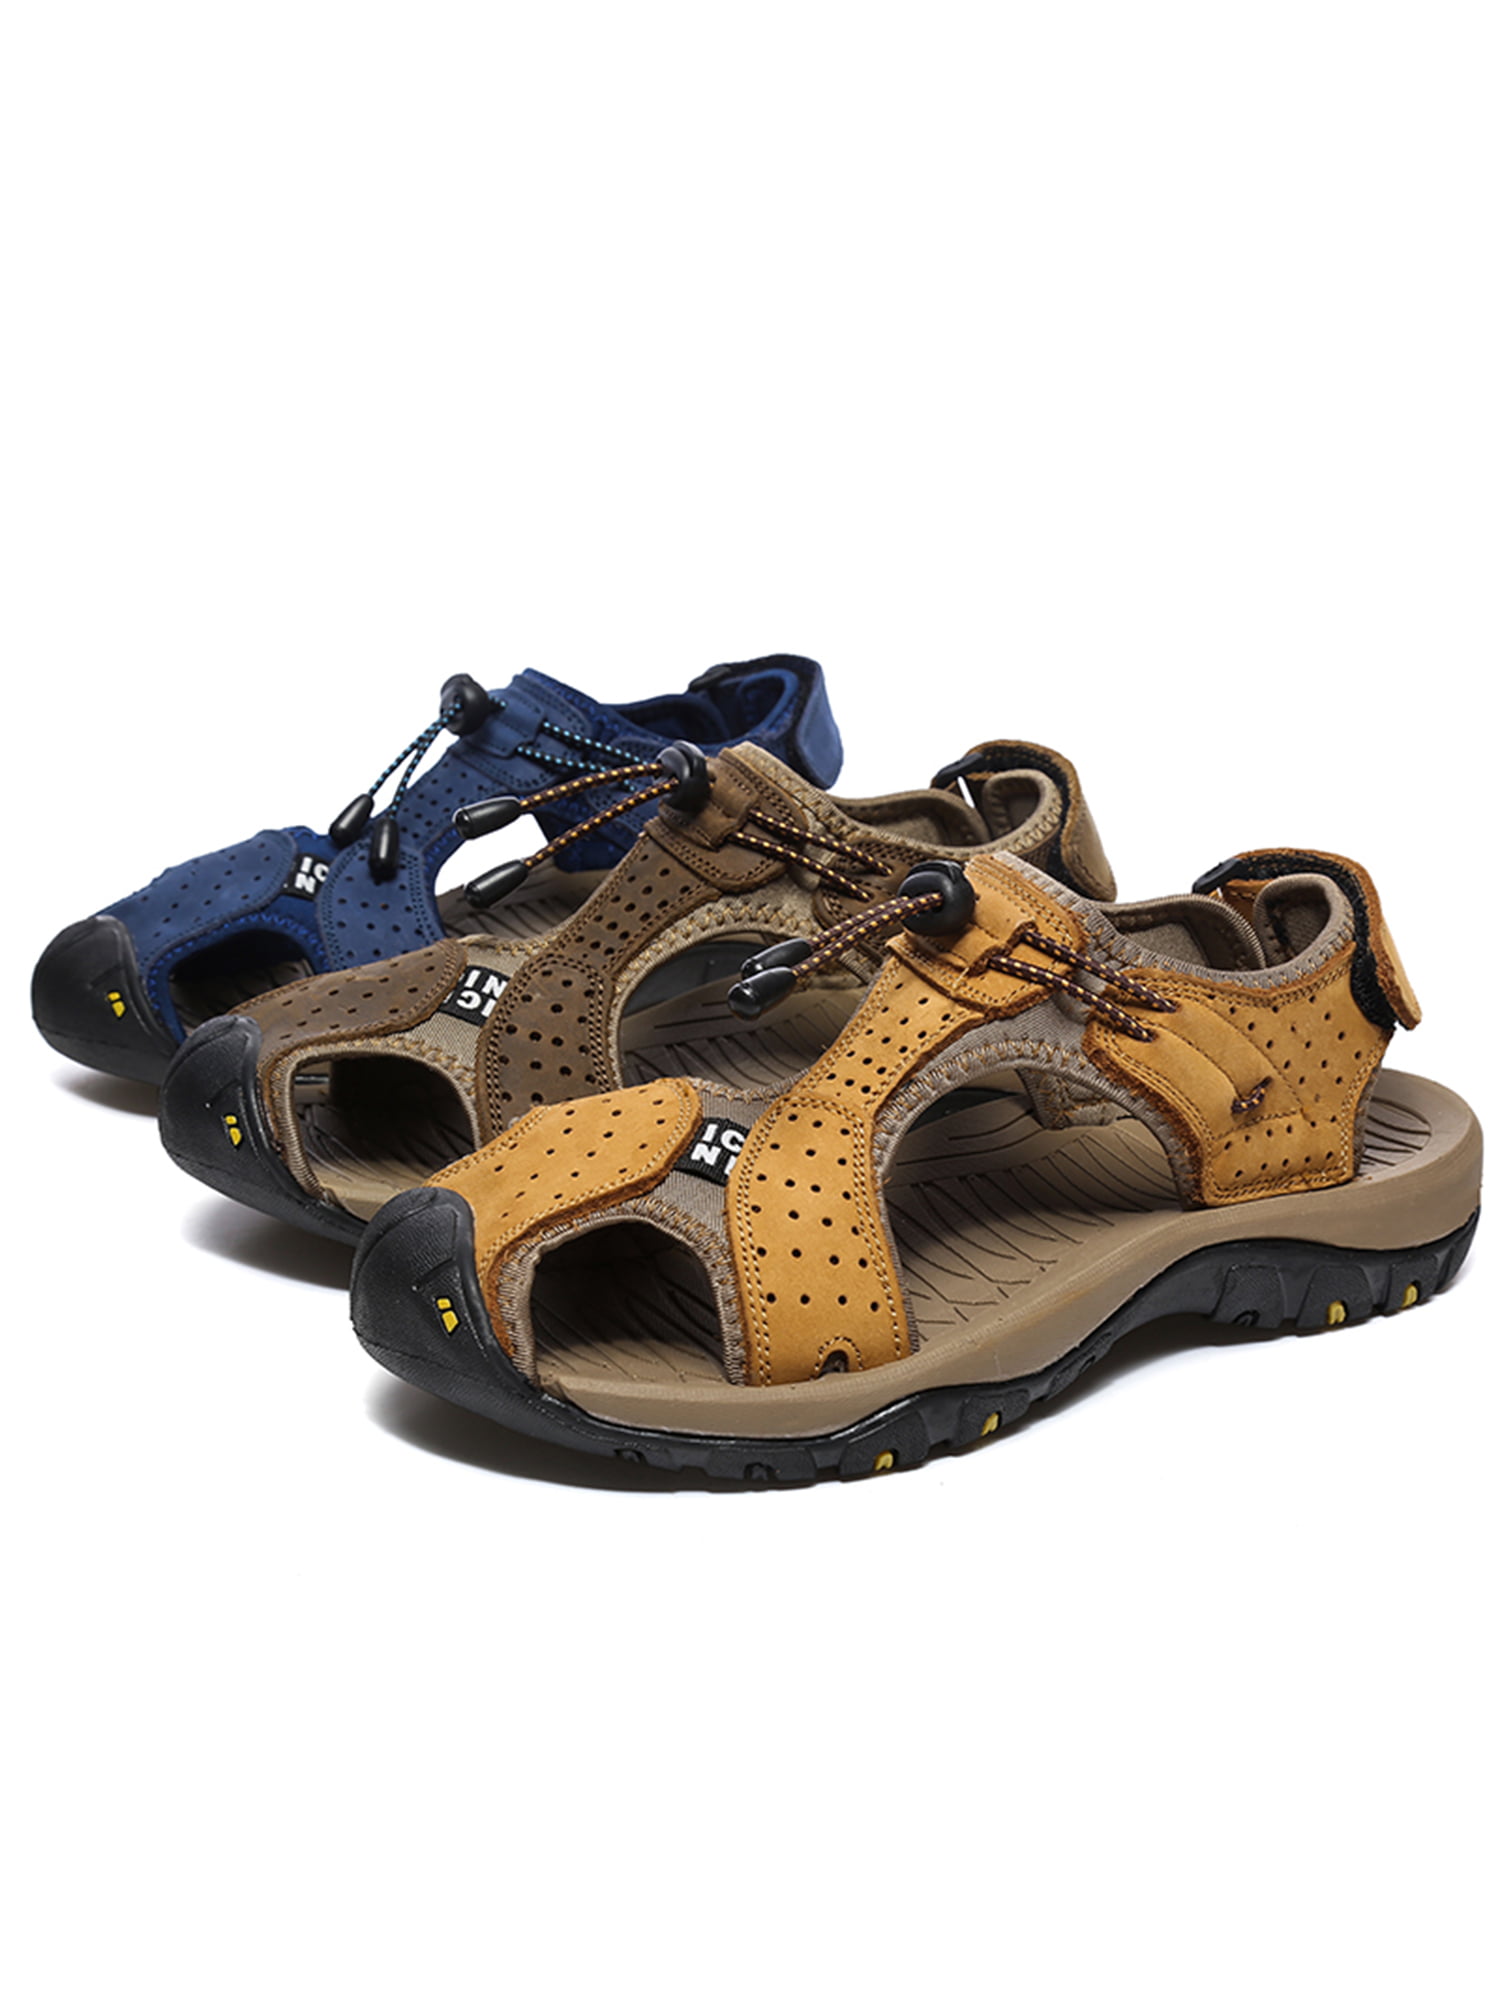 Mens Big Size Hiking Genuine Leather Sandals Closed Toe Fisherman Beach Shoe UK 